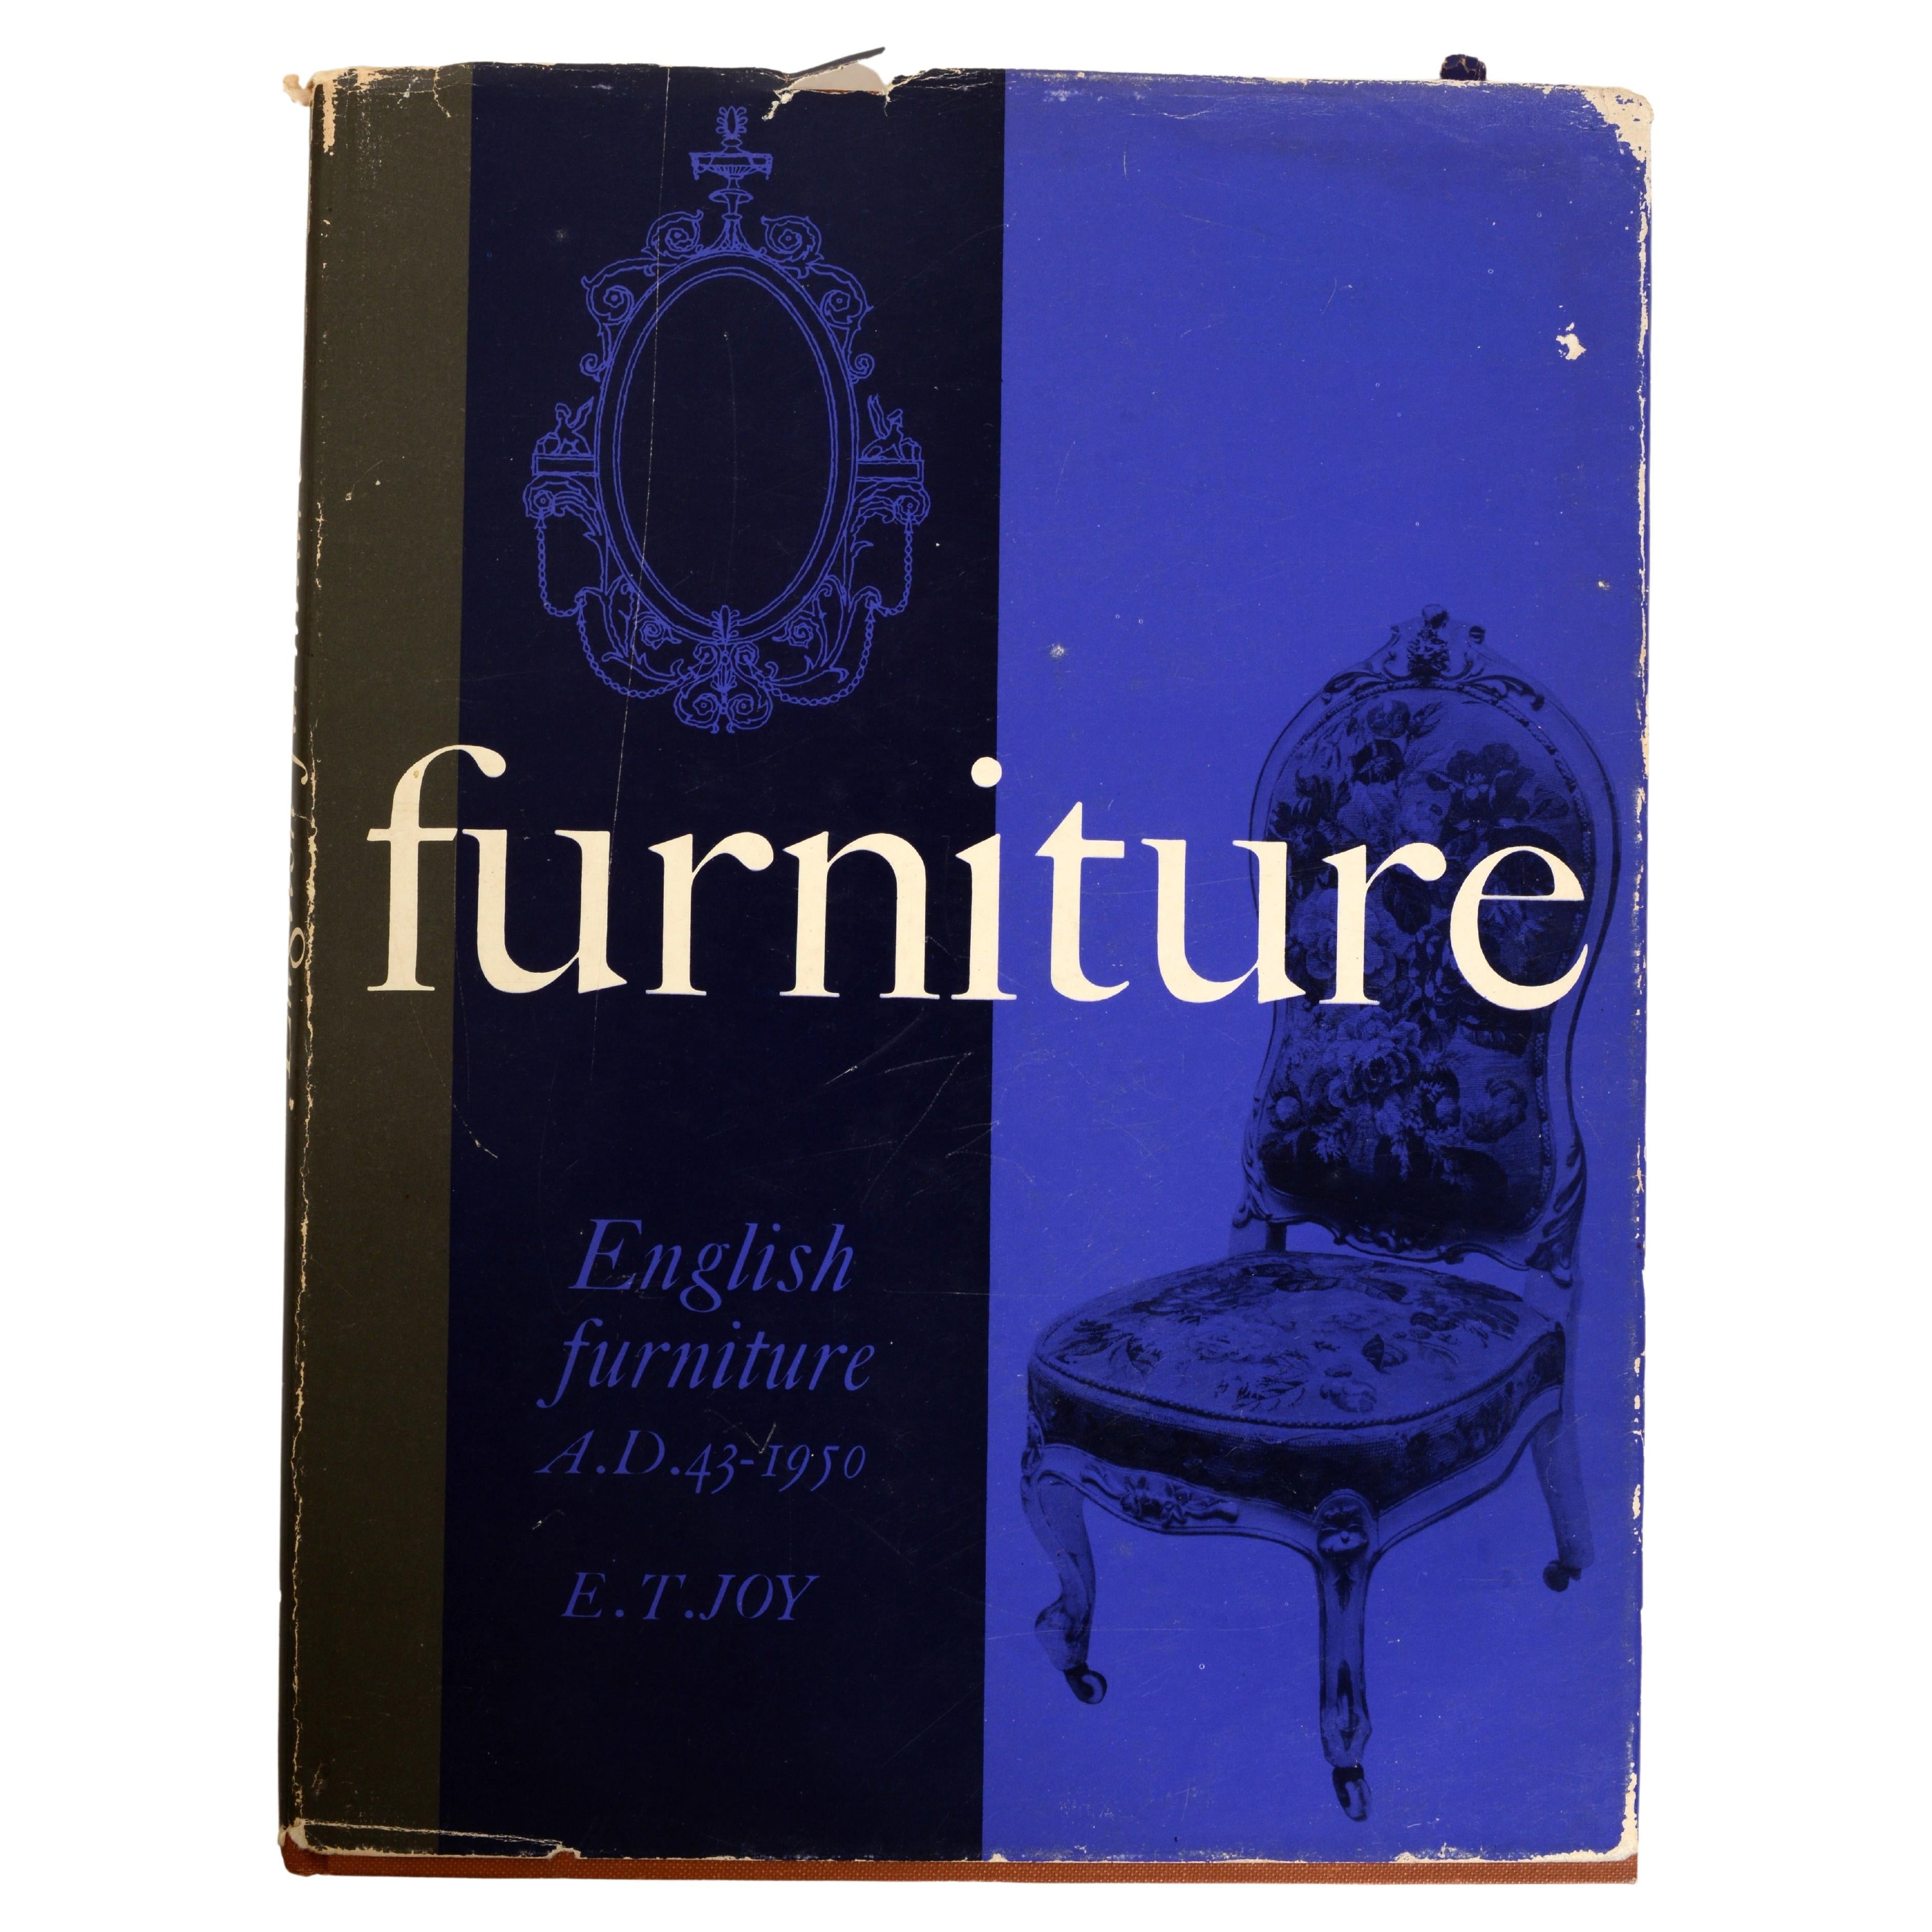 English Furniture a.D. 43, 1950 by Edward T. Joy, 1st Ed